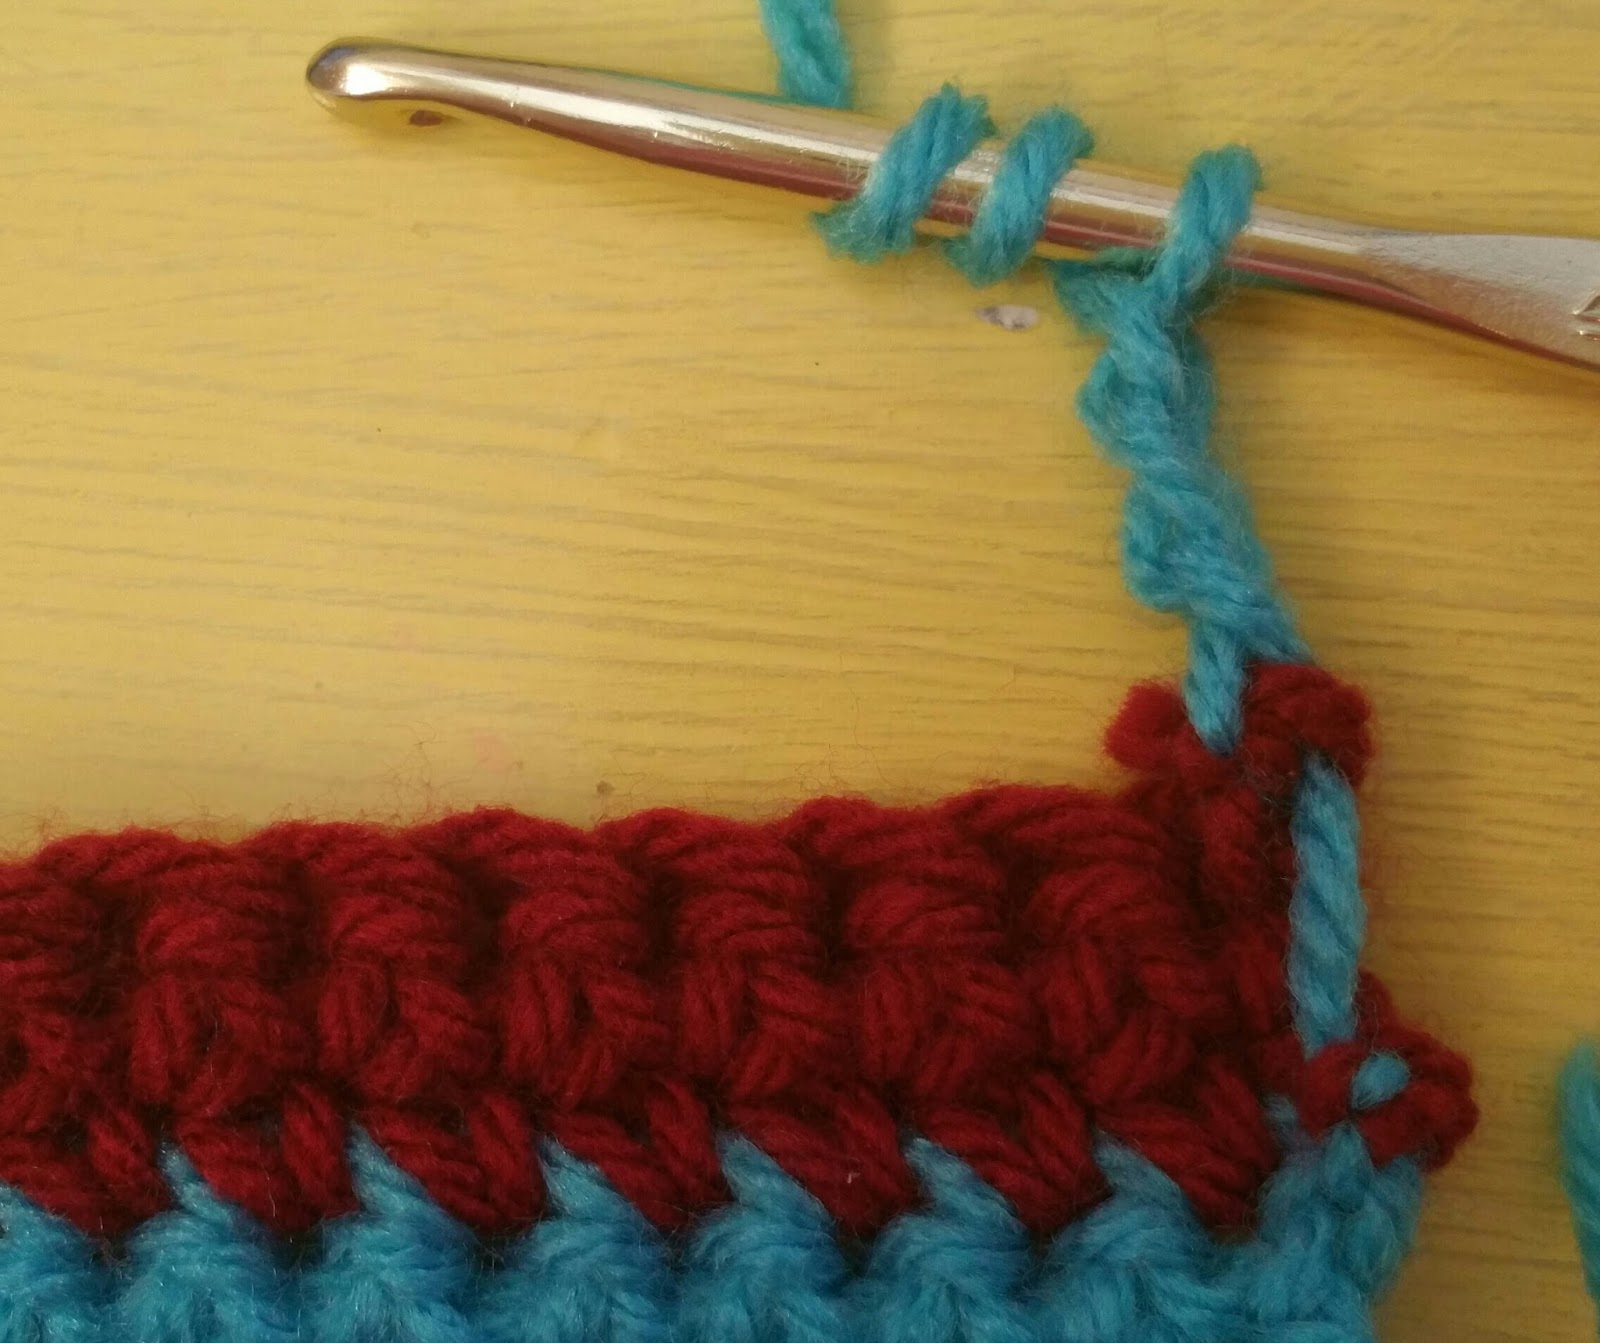 Crocheters of Awesome: Tutorial - Triple/Treble Crochet!